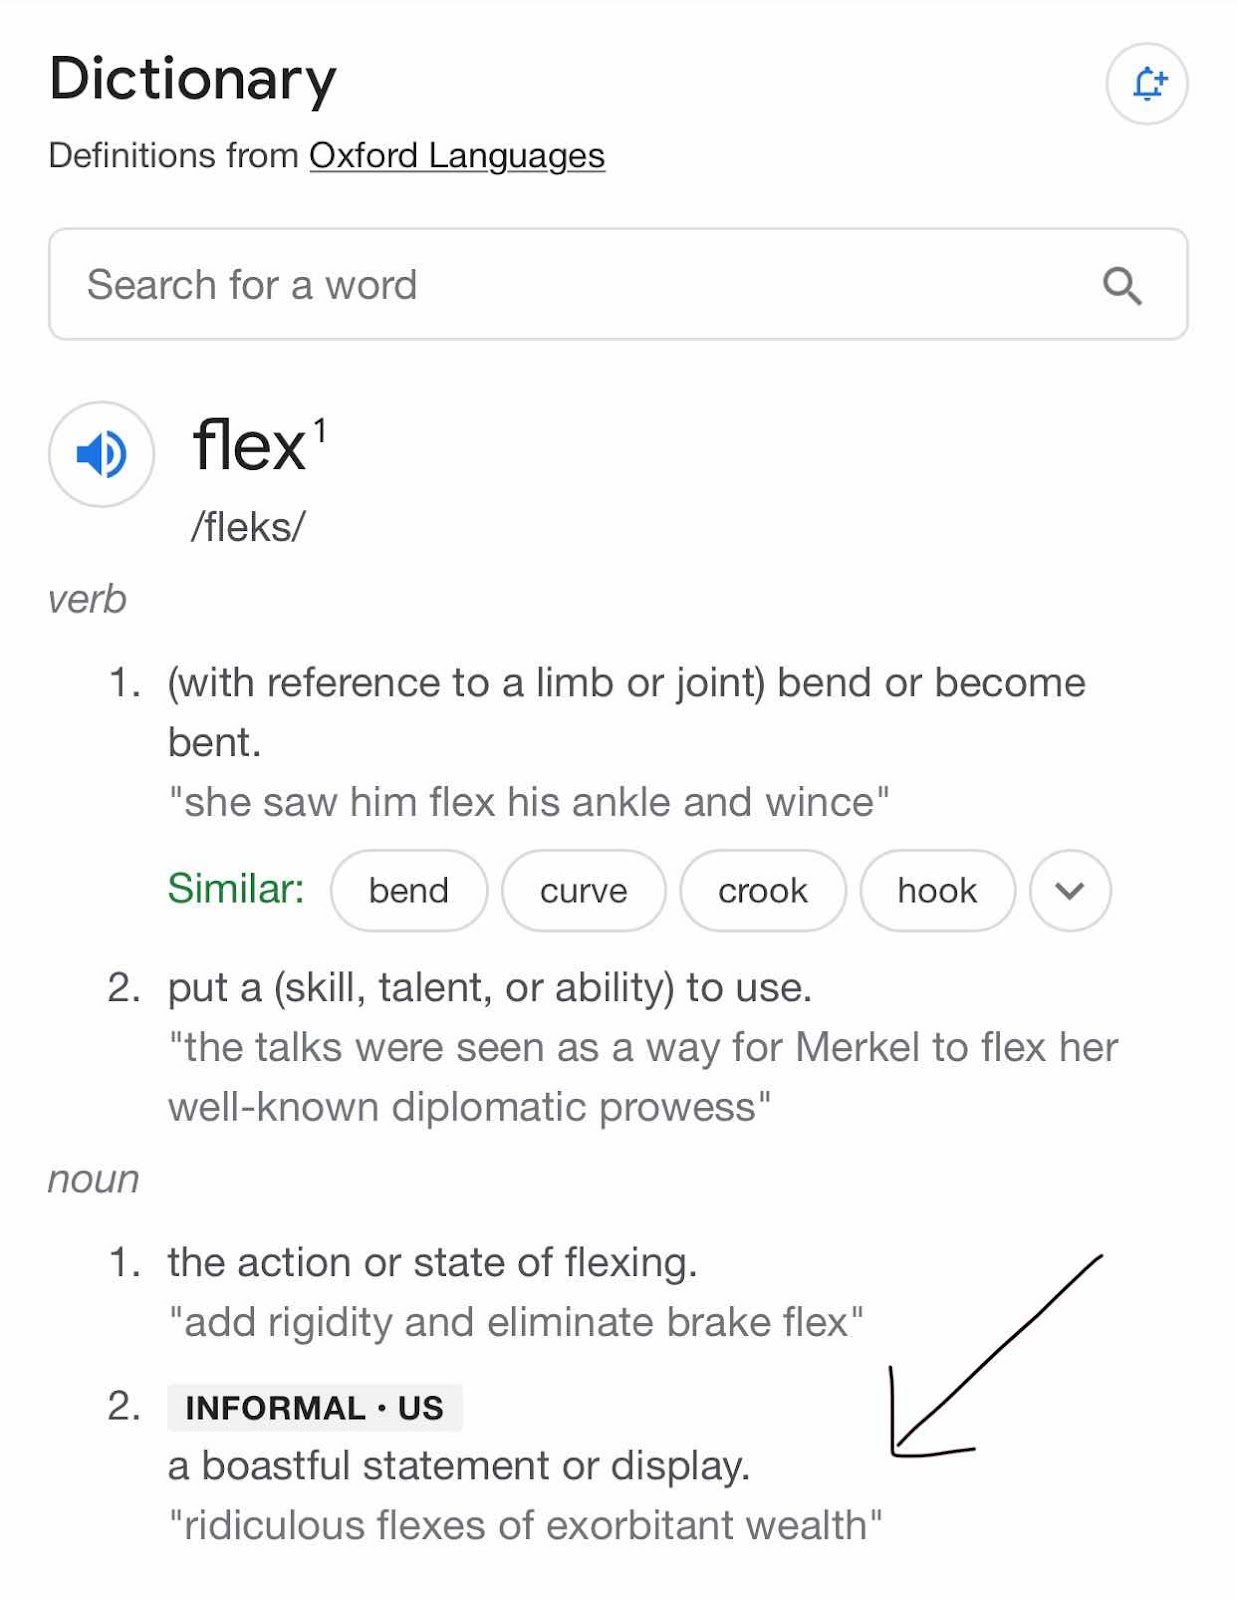 Flexing meaning, Flexing adalah